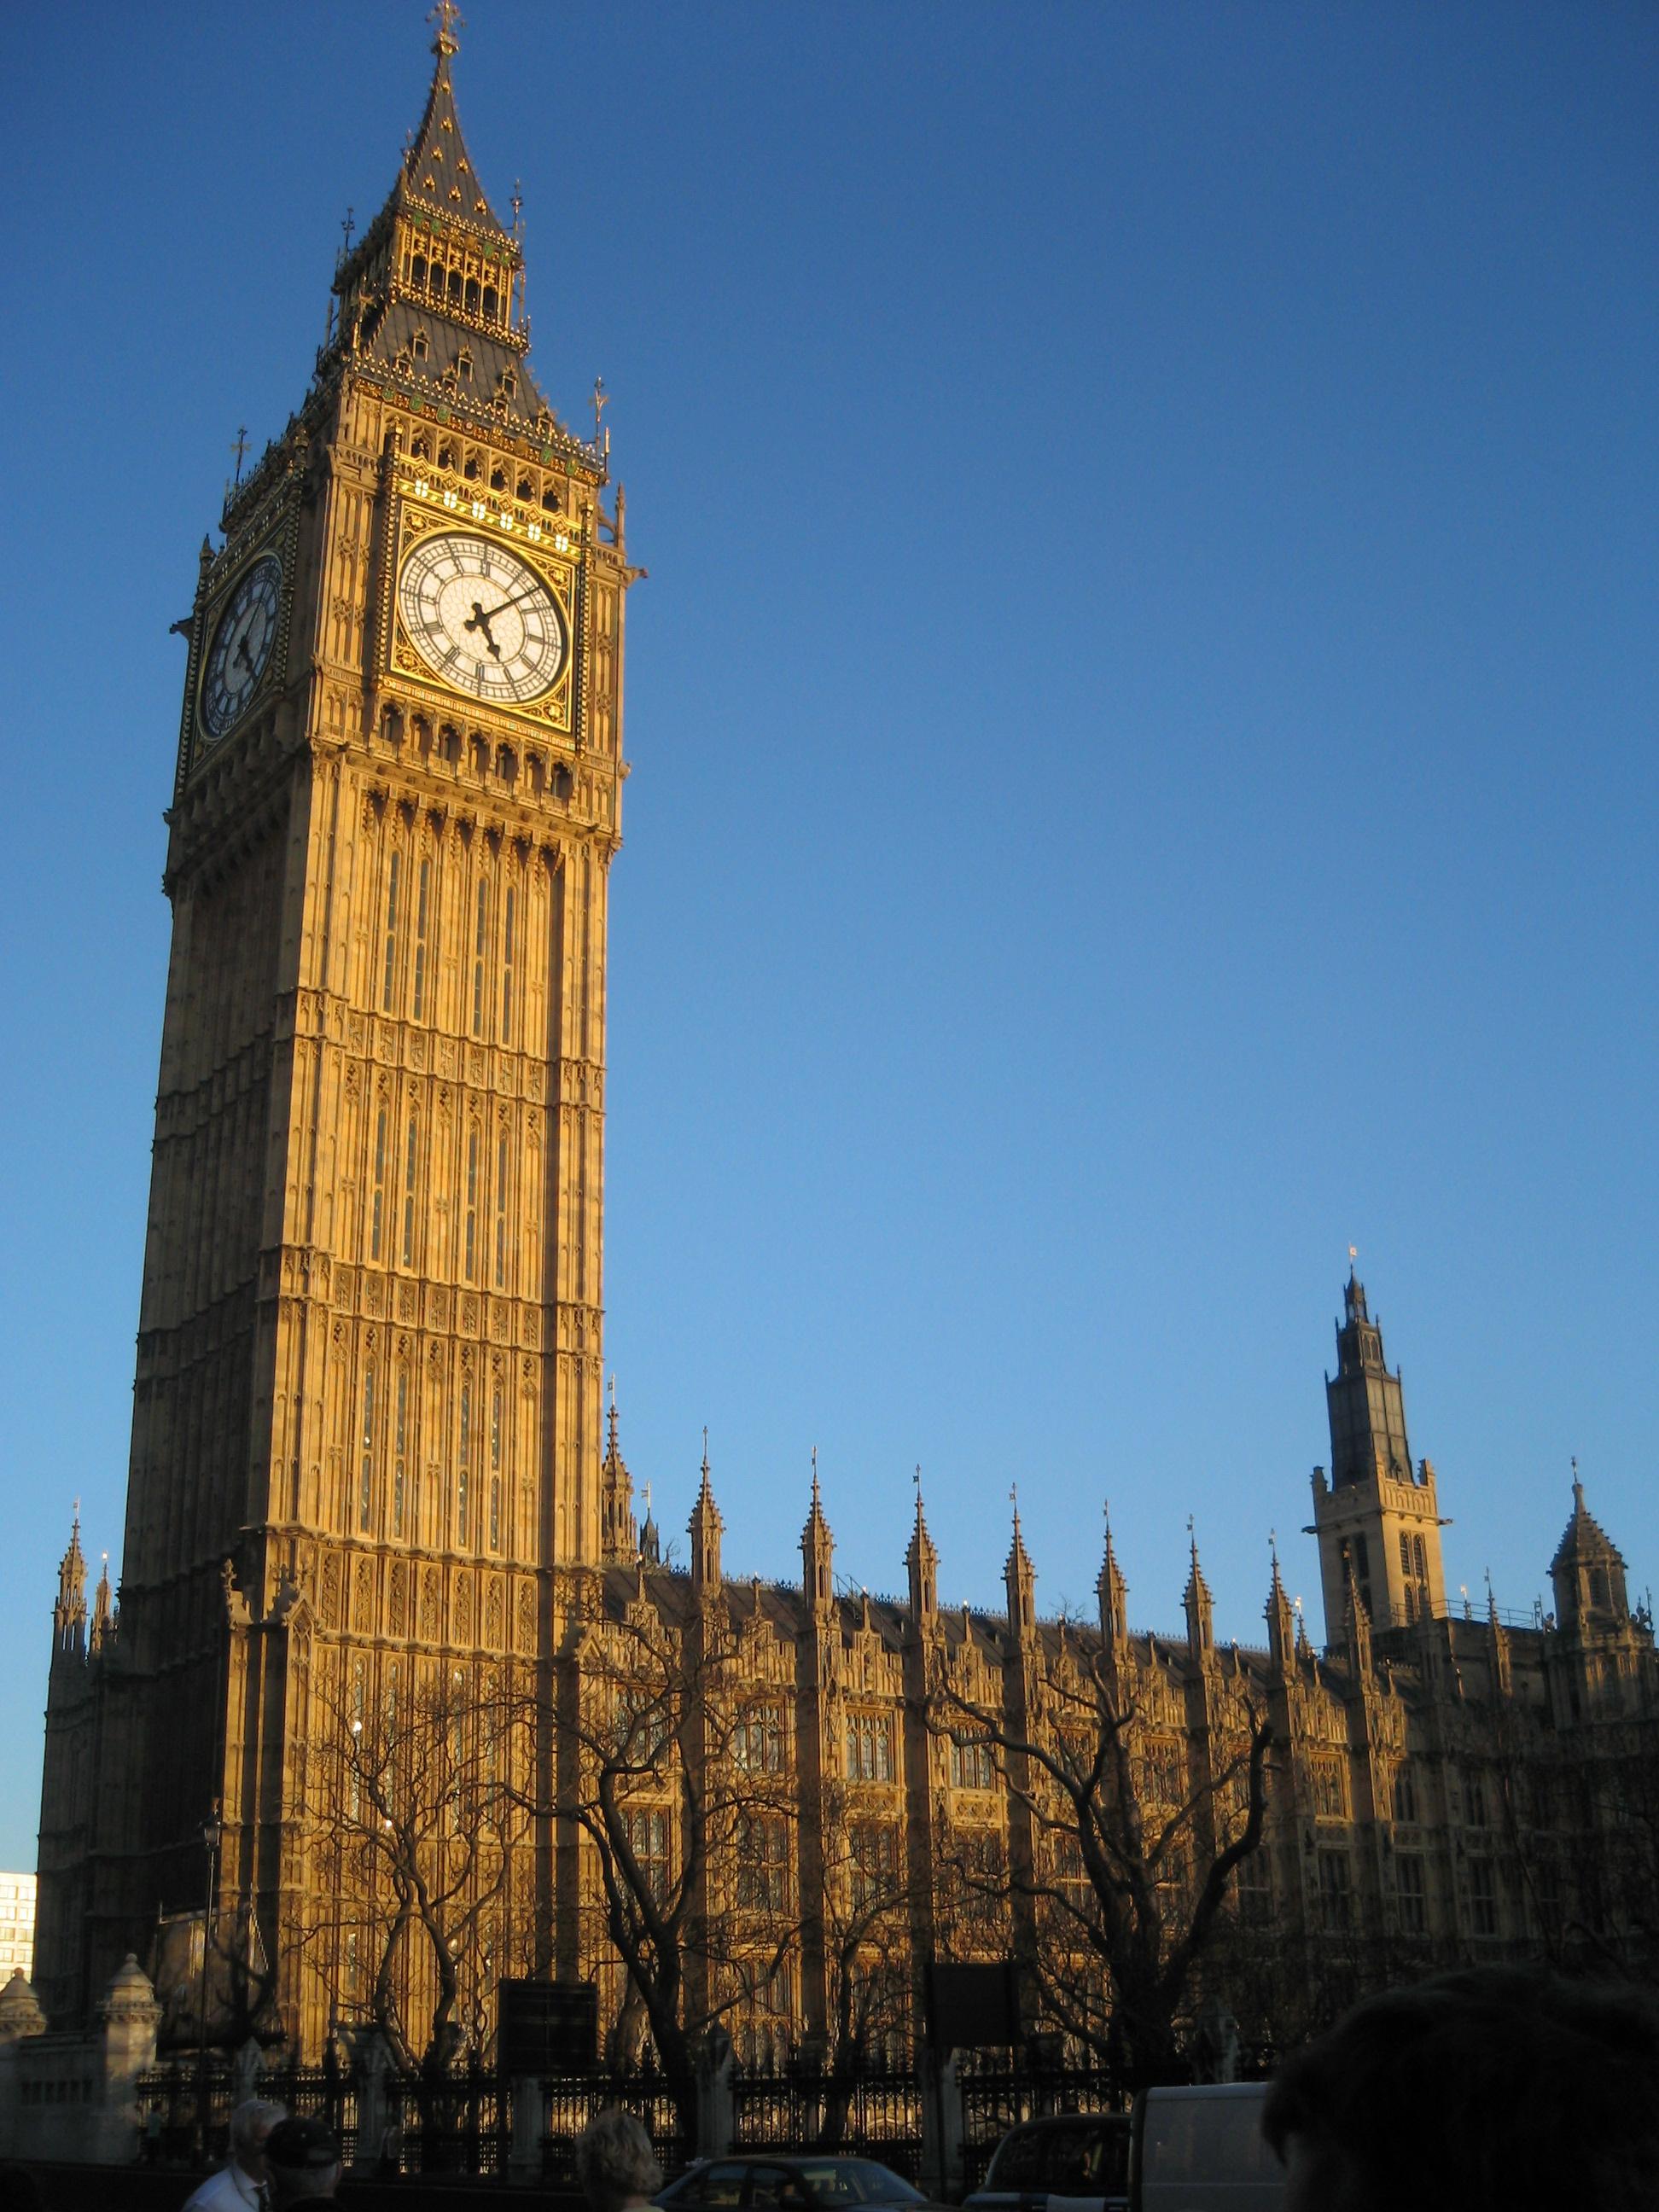 United Kingdom - Londong Big Ben